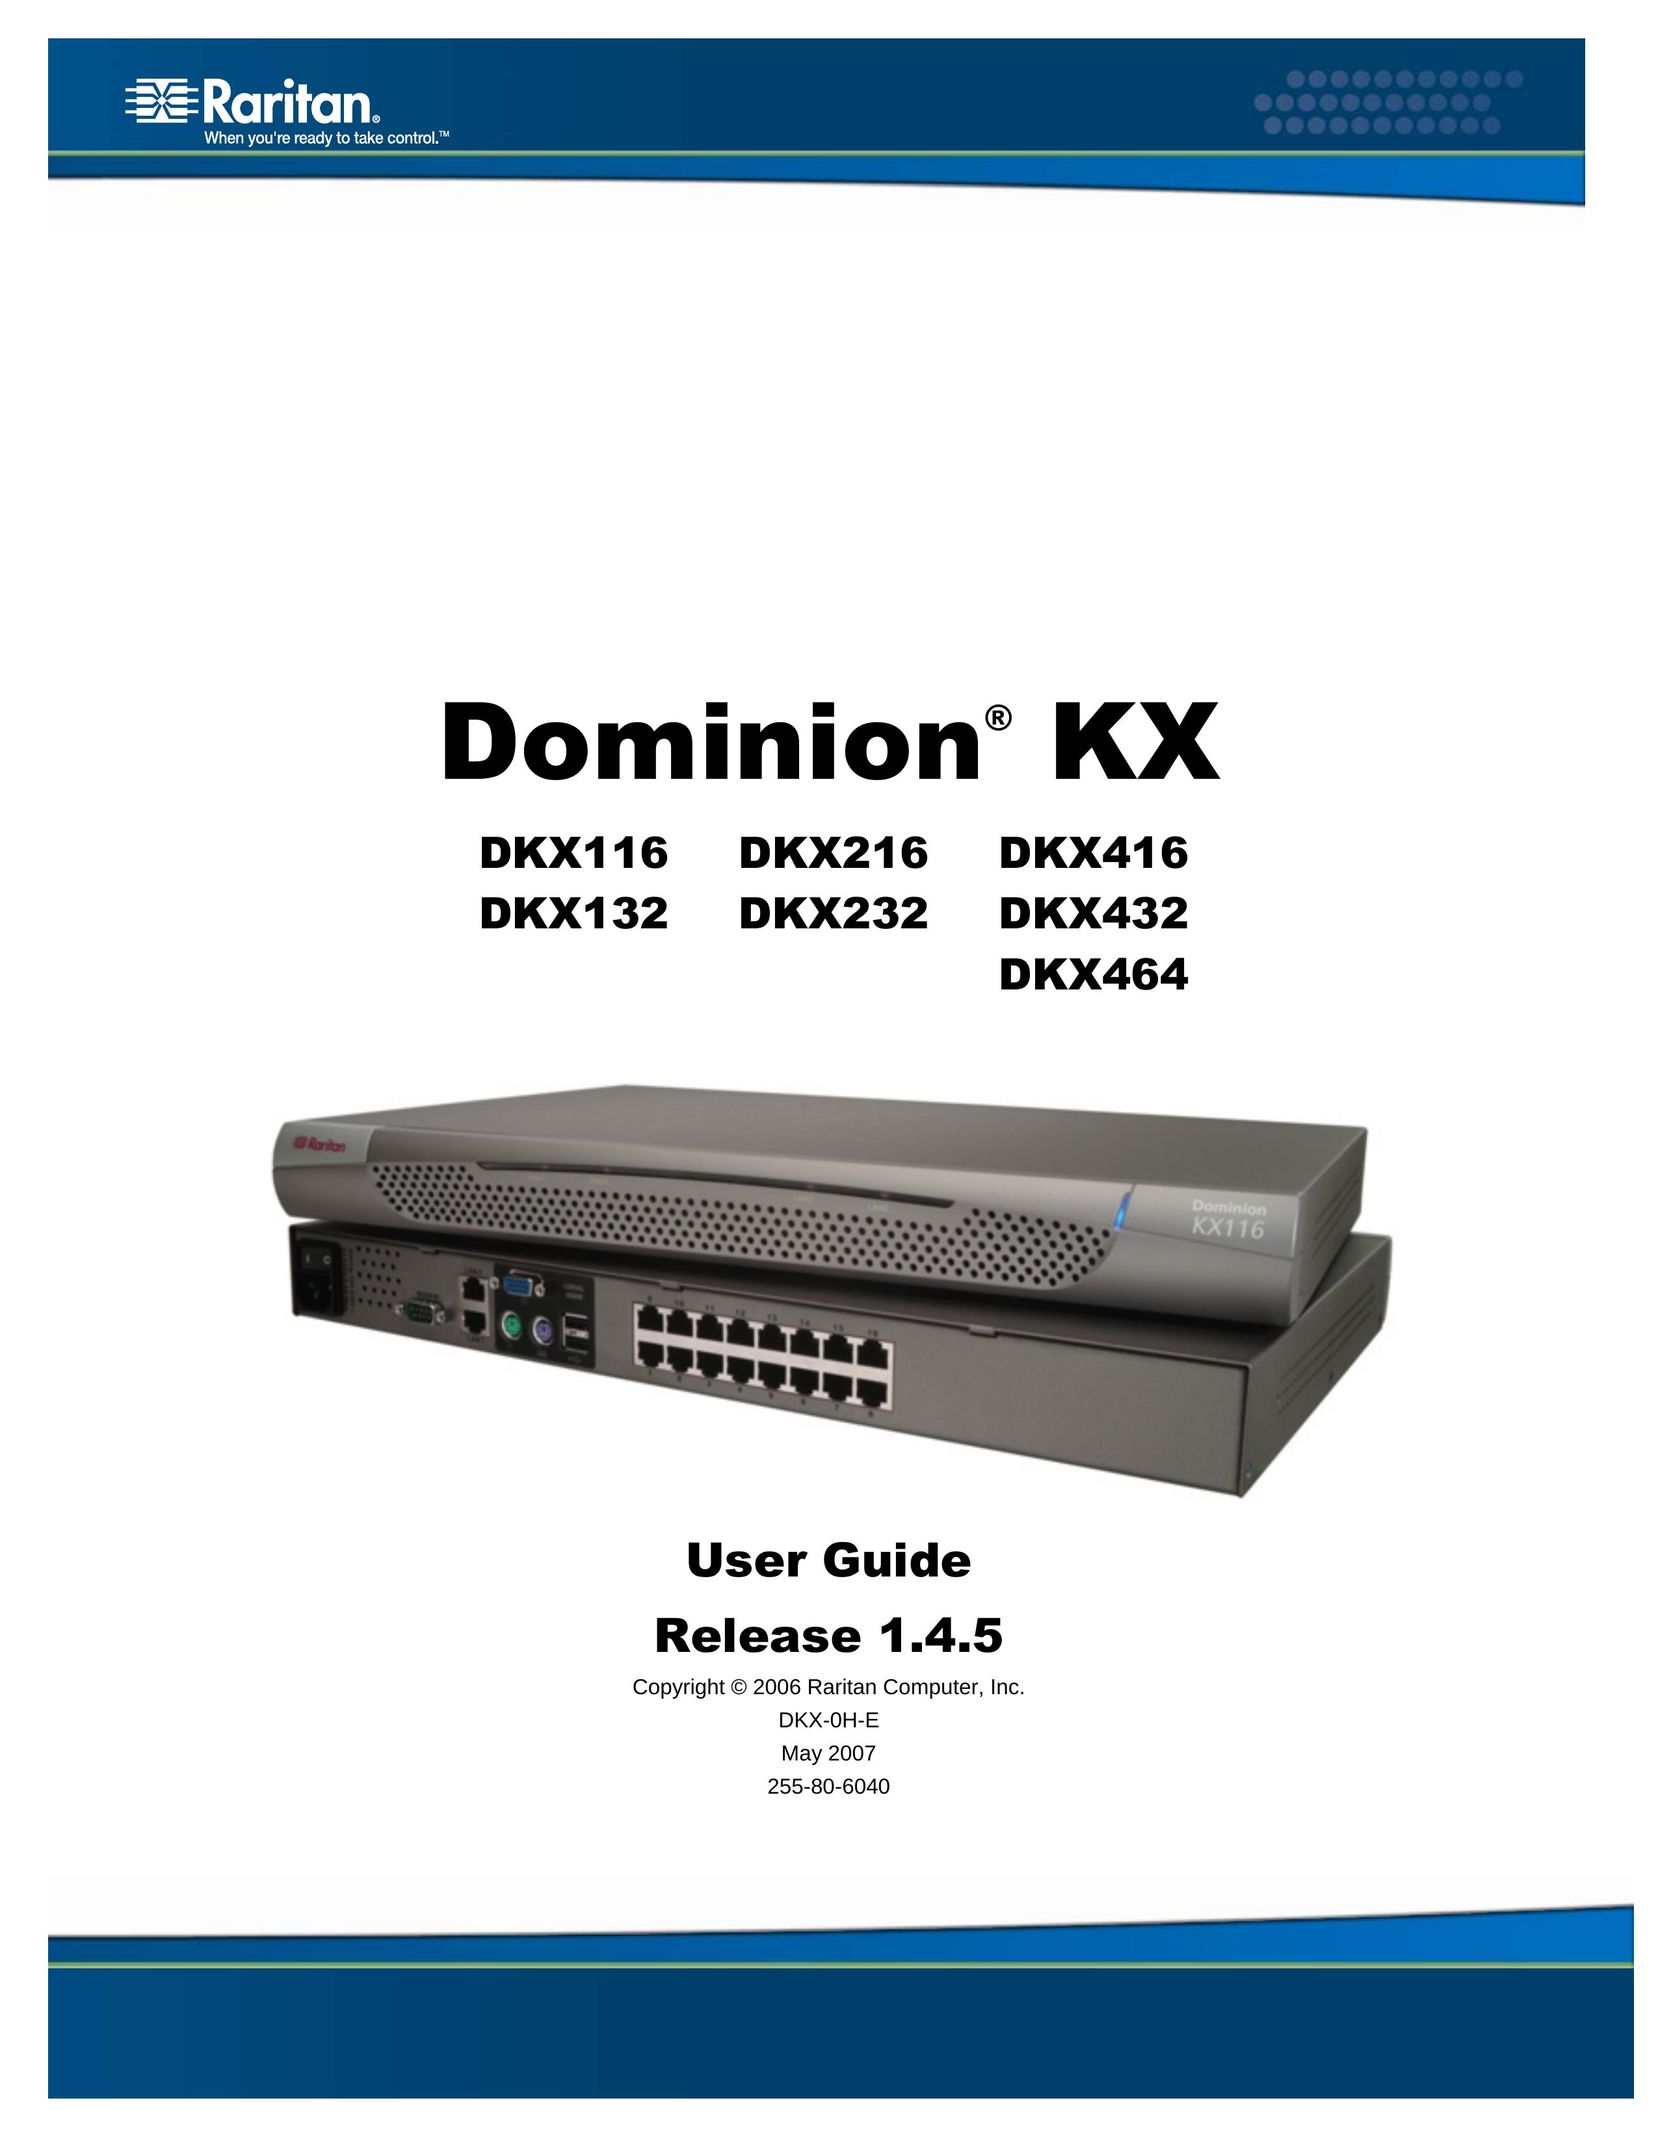 Raritan Computer DKX432 Network Router User Manual